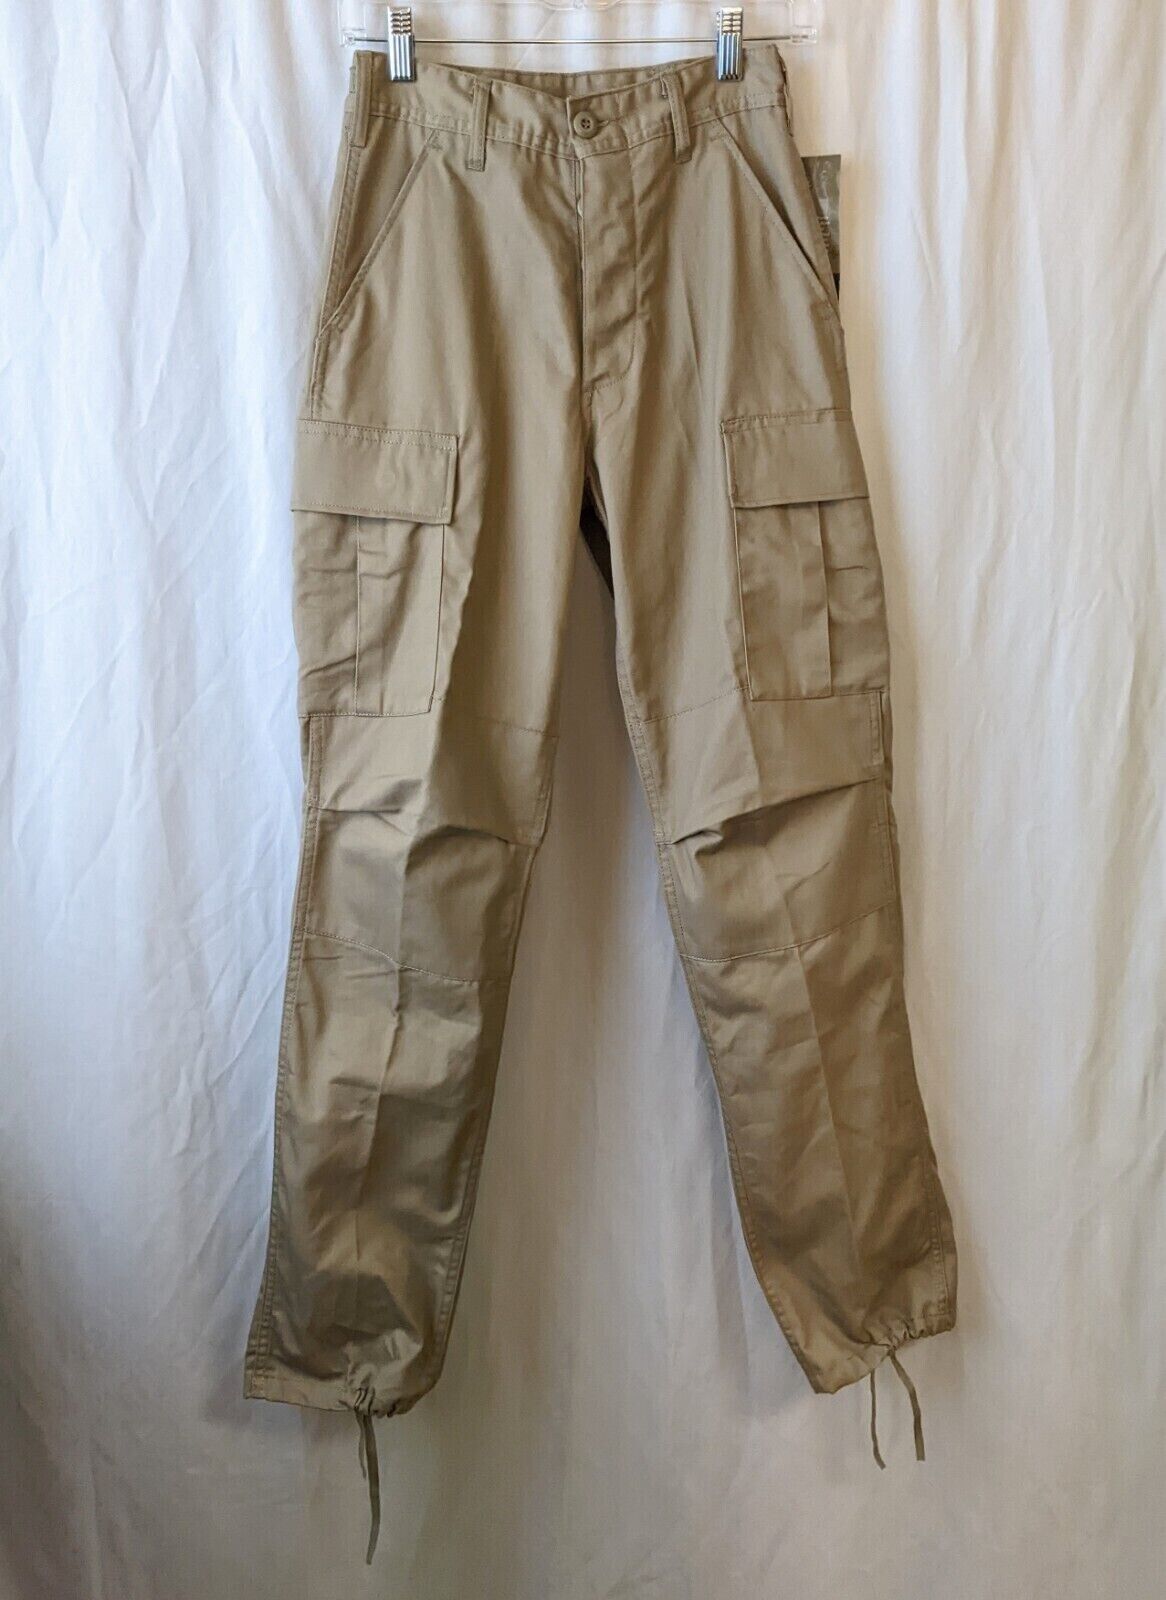 New - Rothco 7901 Khaki Military Pants Medium Reg Men\'s Pant New With Tags (BPS)